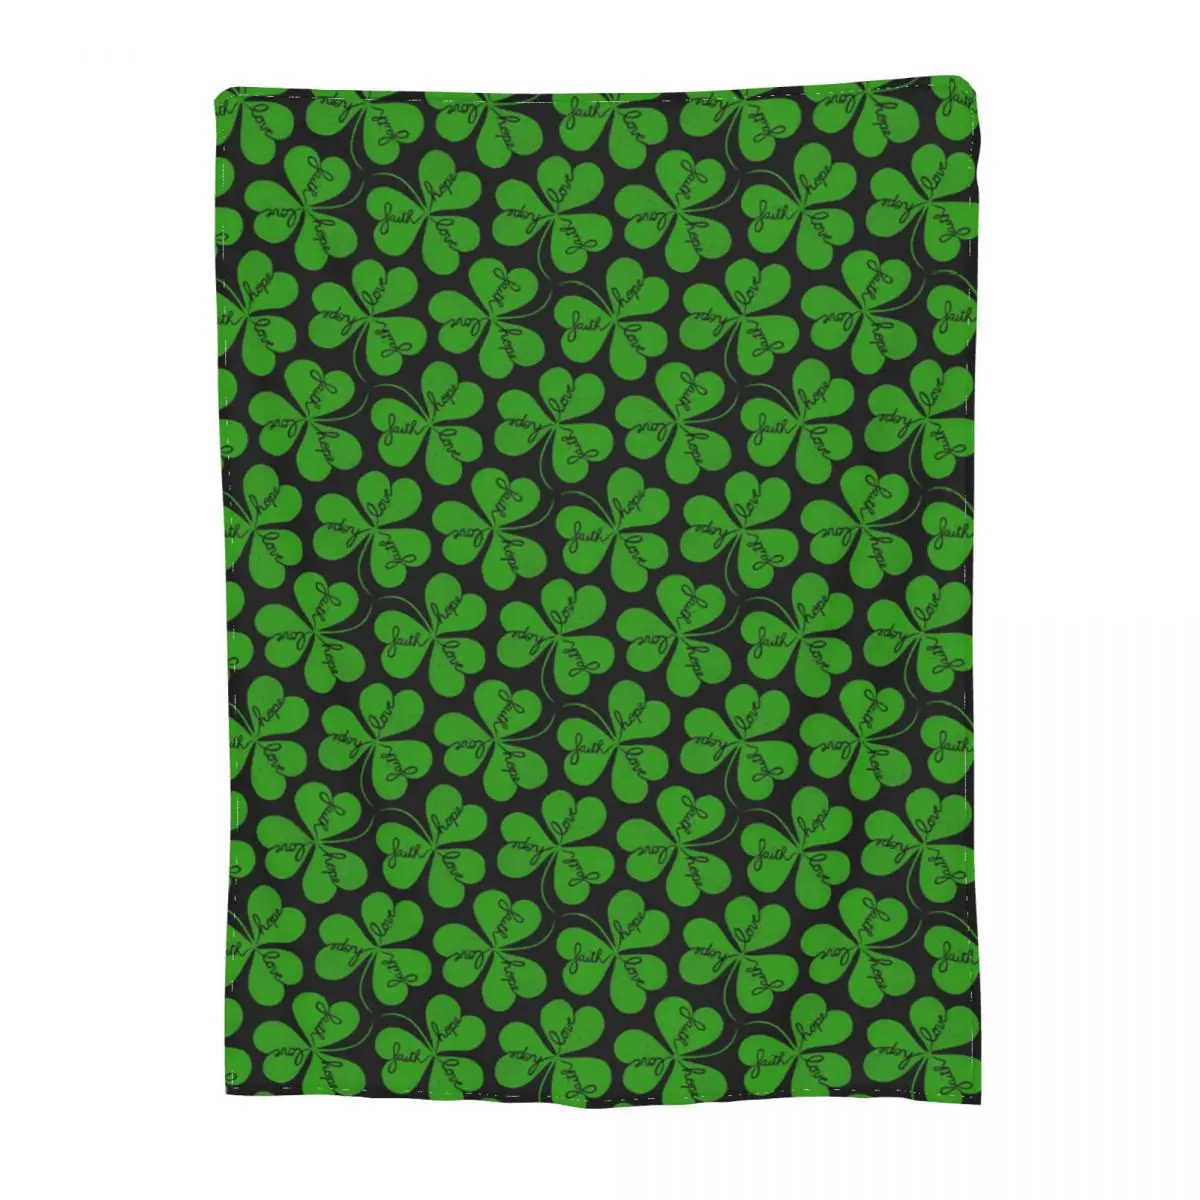 

St Patricks Day Blanket Green Shamrock Fun Beds Throw Blanket For Sleeping Cozy Blankets